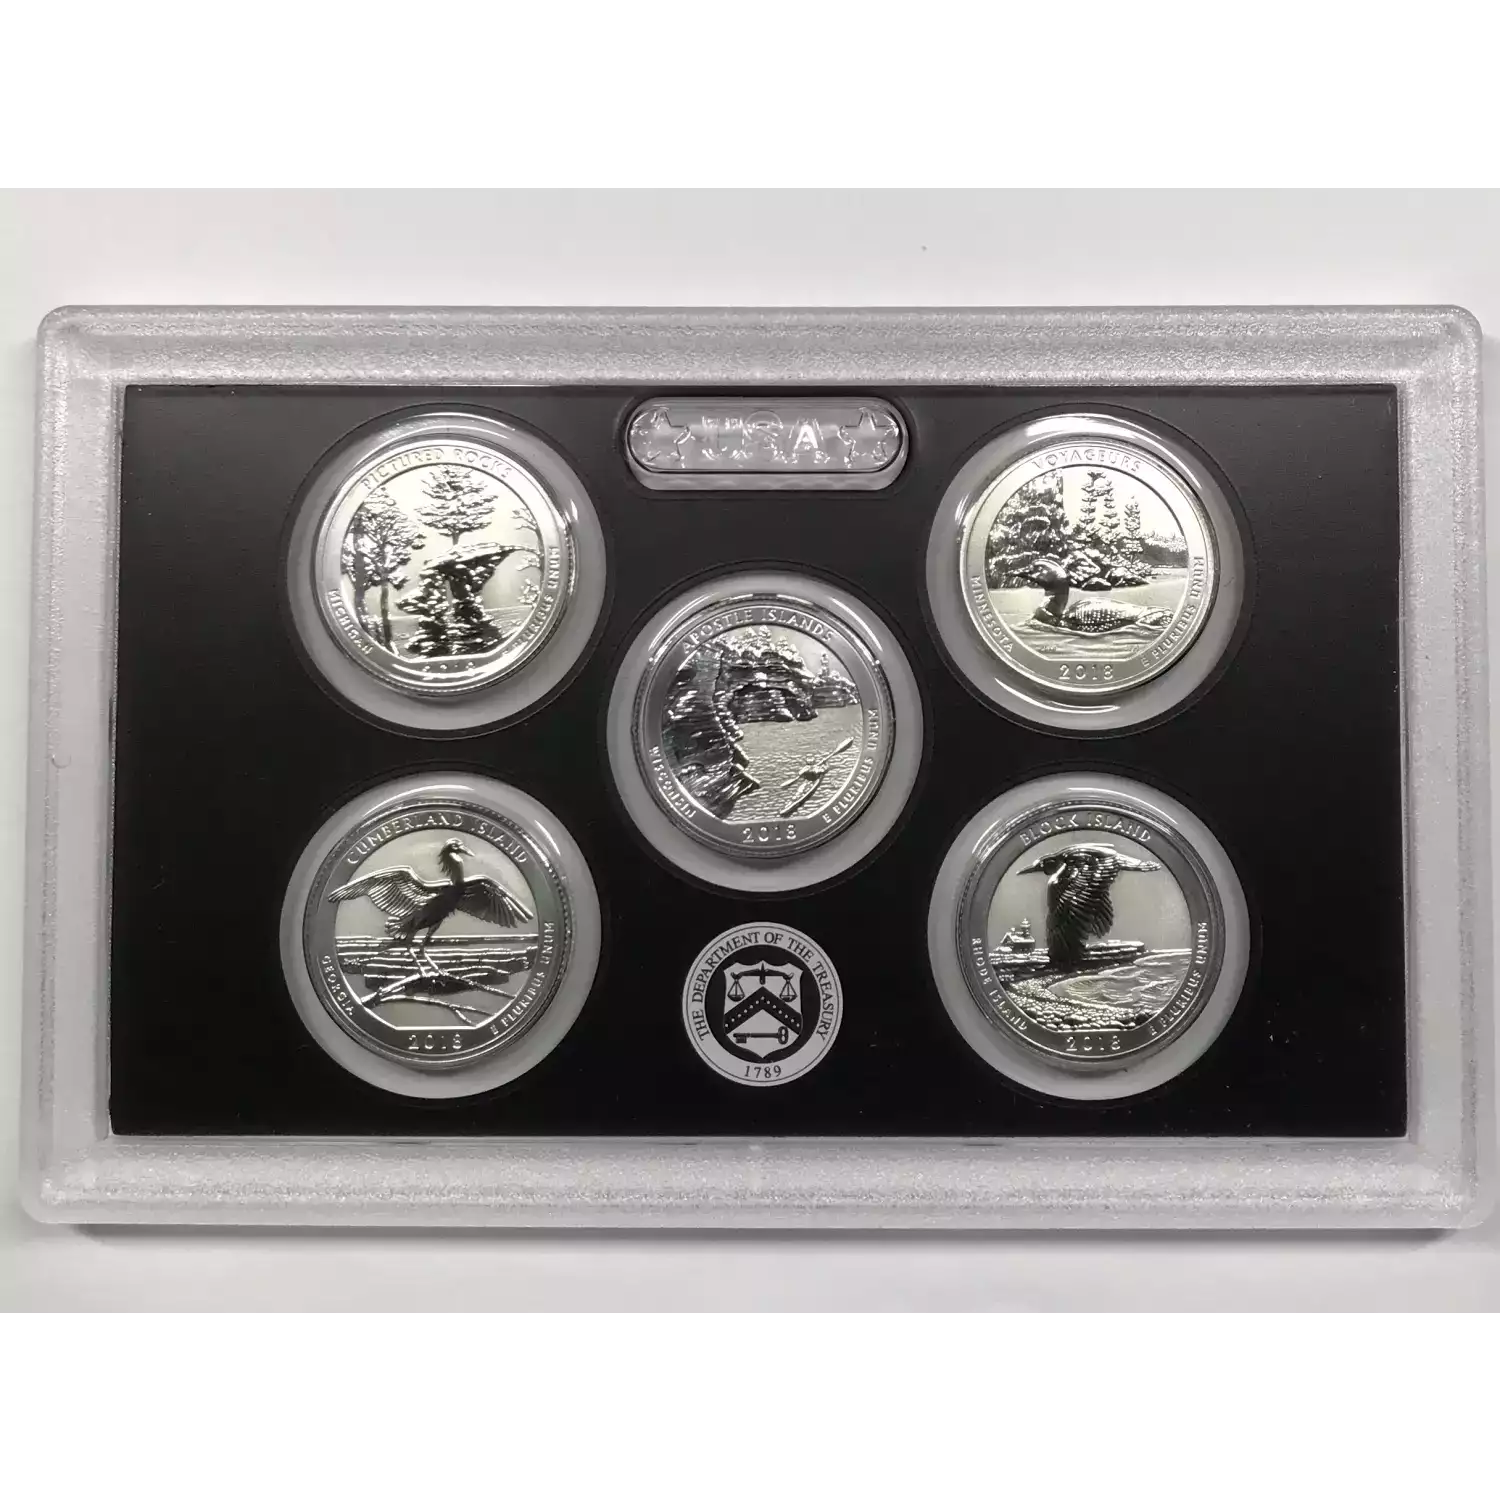 2018-S US San Francisco Mint Silver Reverse Proof Set w OGP - Box & COA